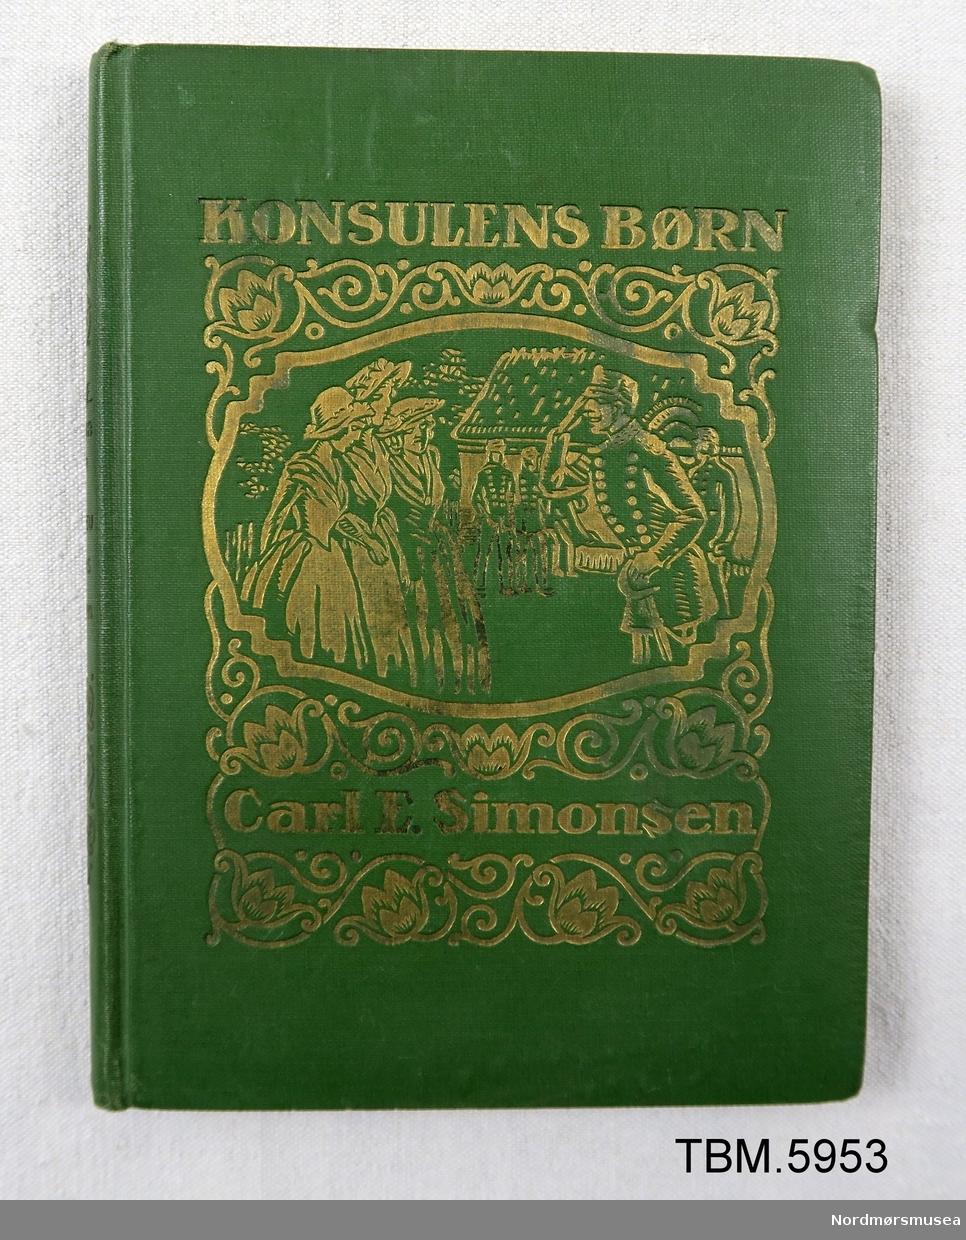 Carl E. Simonsen Konsulens Børn. Af en Byes Saga, 1914